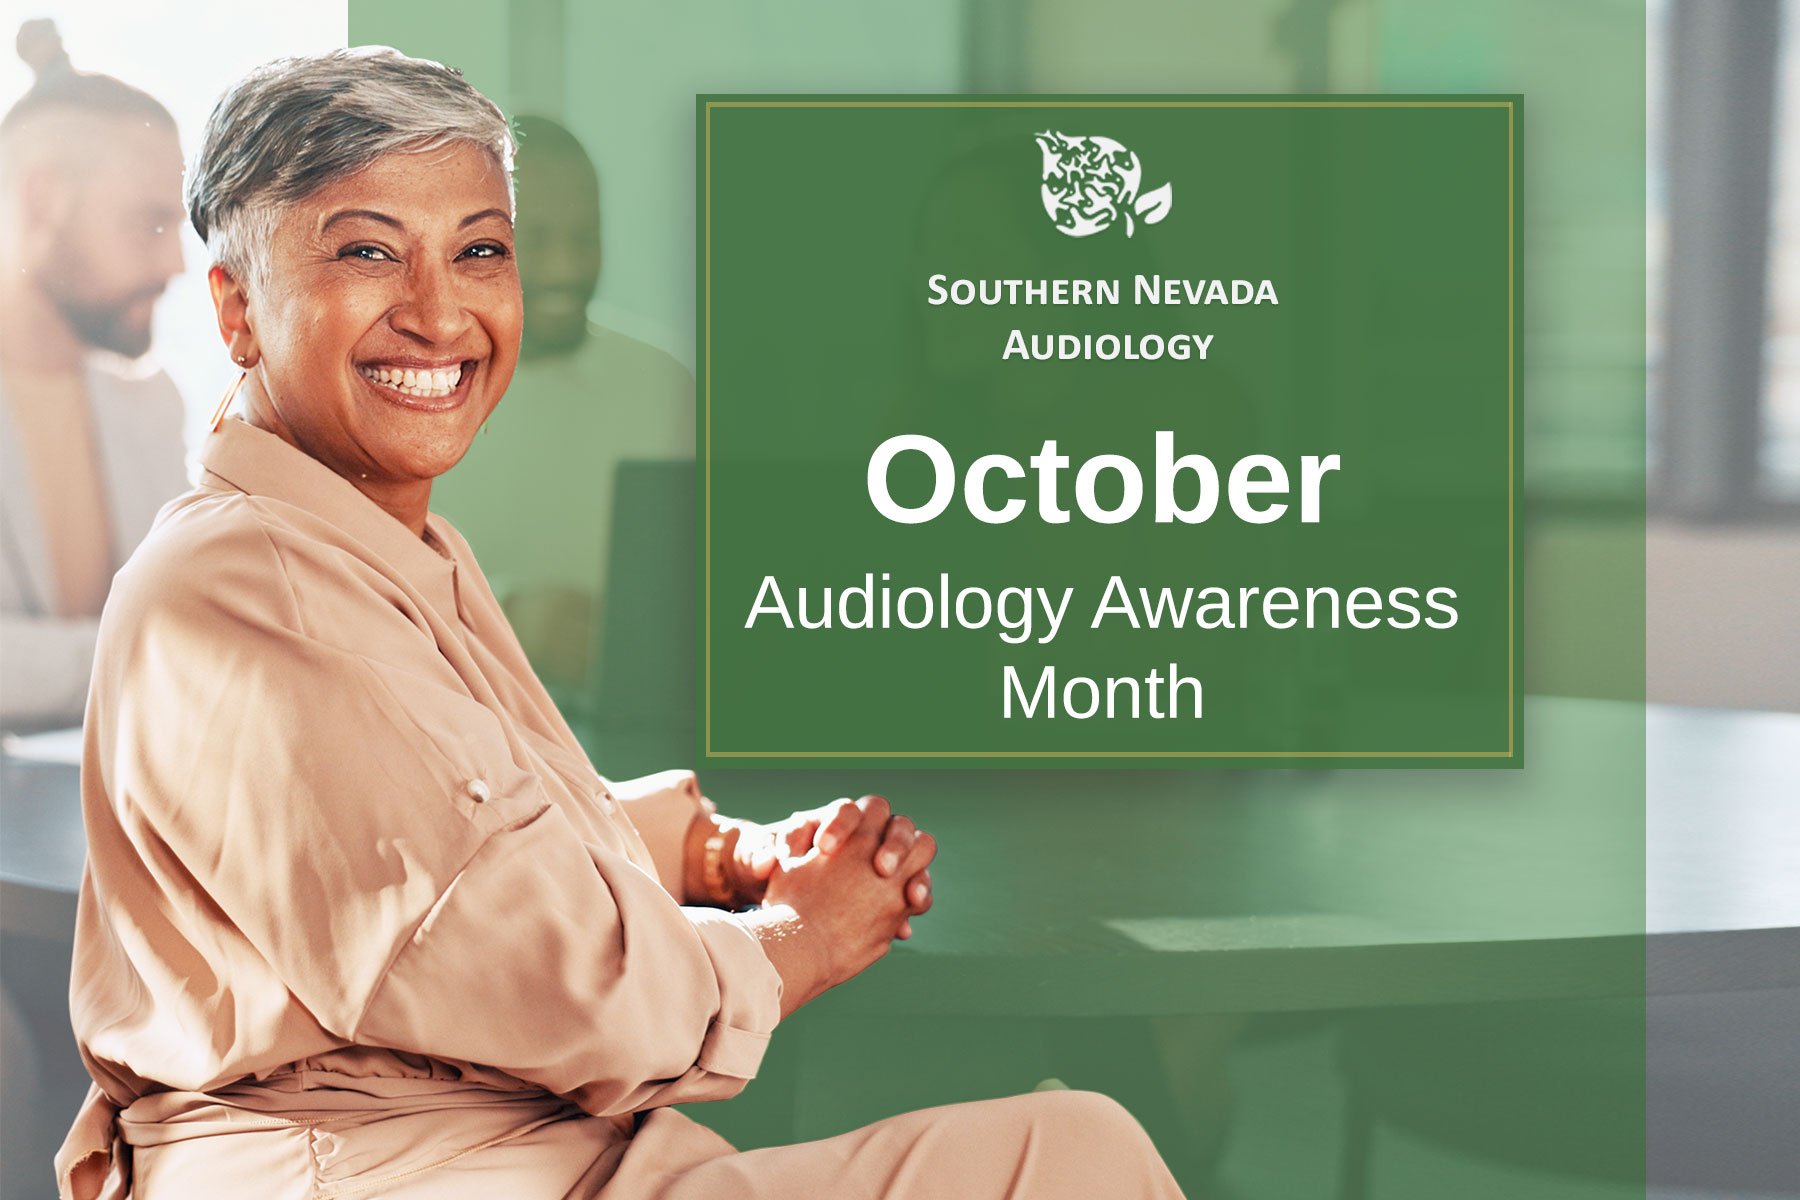 October Audiology Awareness Month